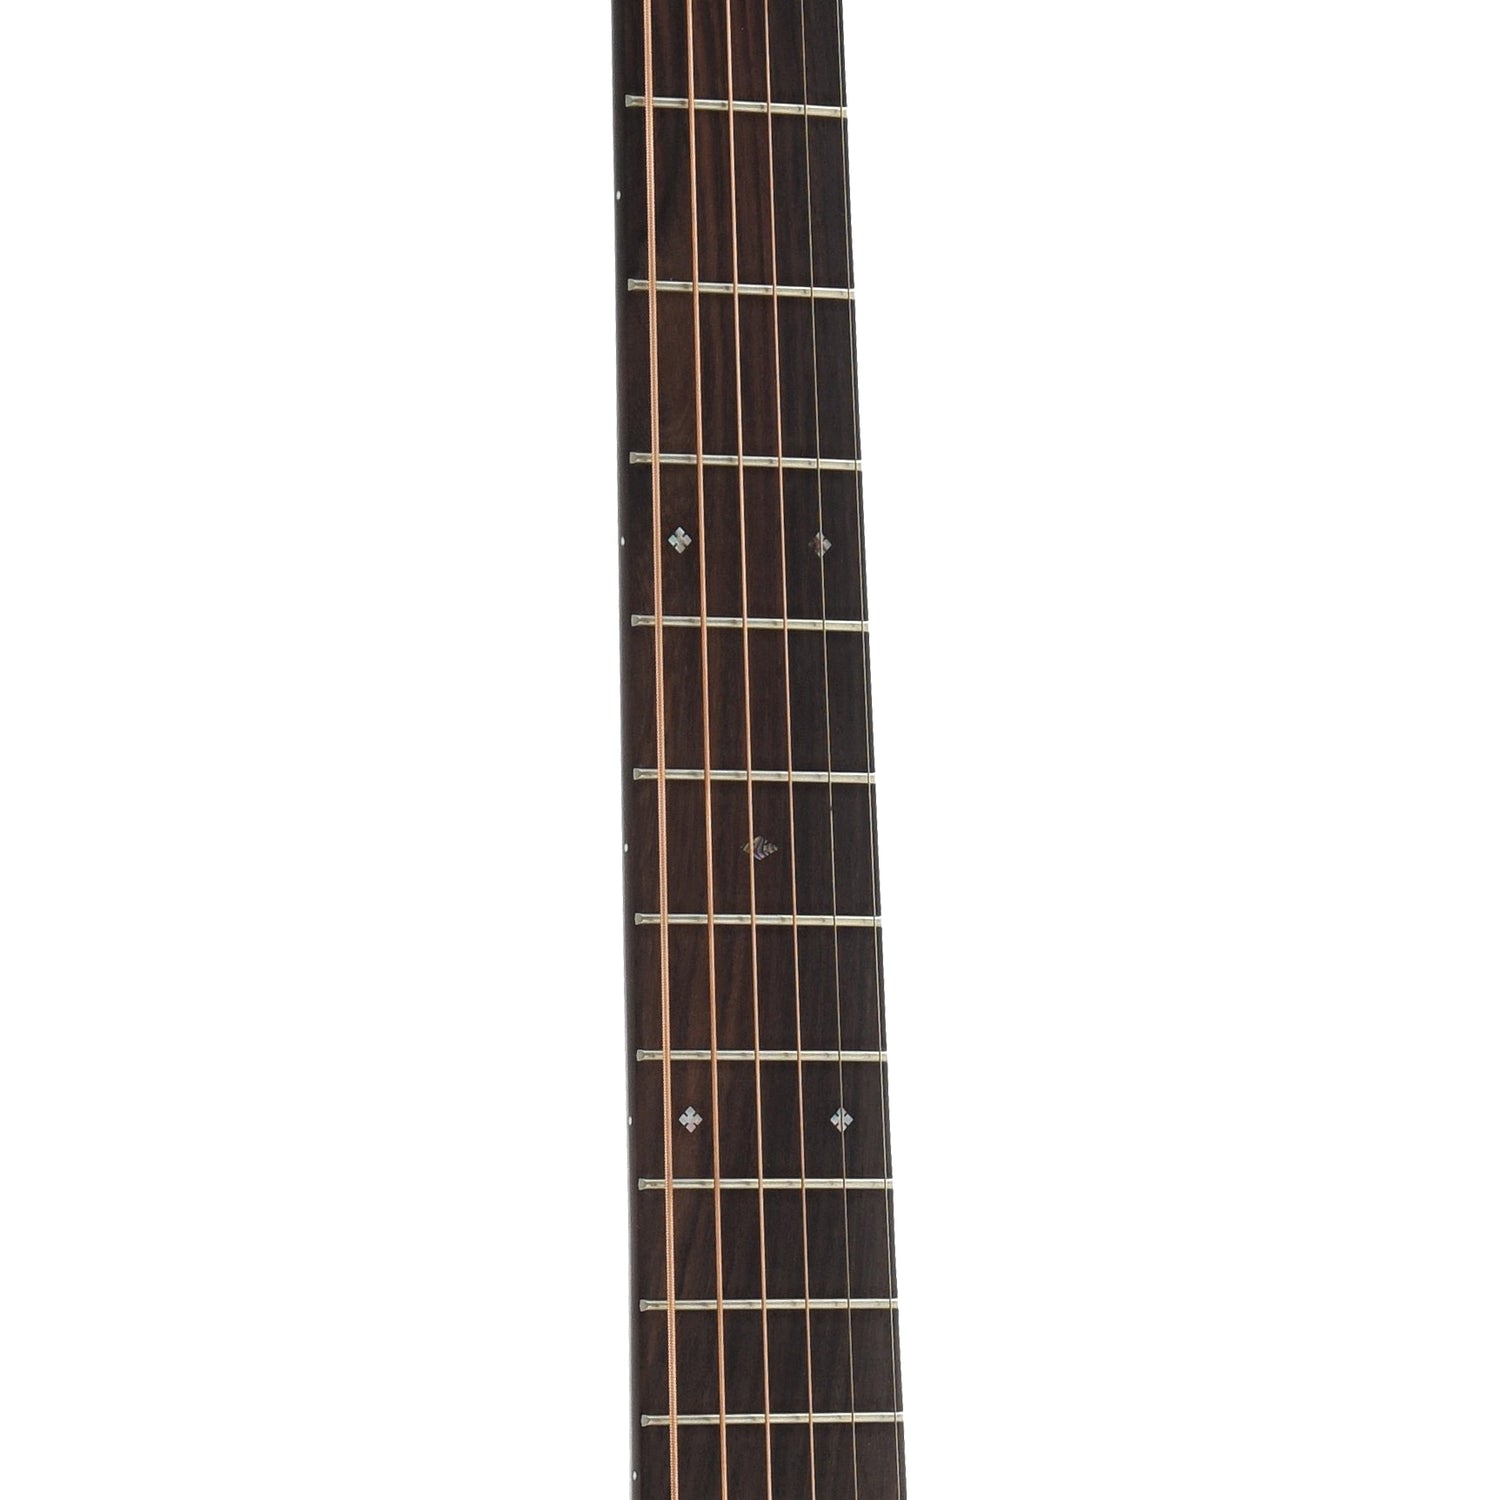 Fretboard of Martin 00-15M Mahogany Guitar